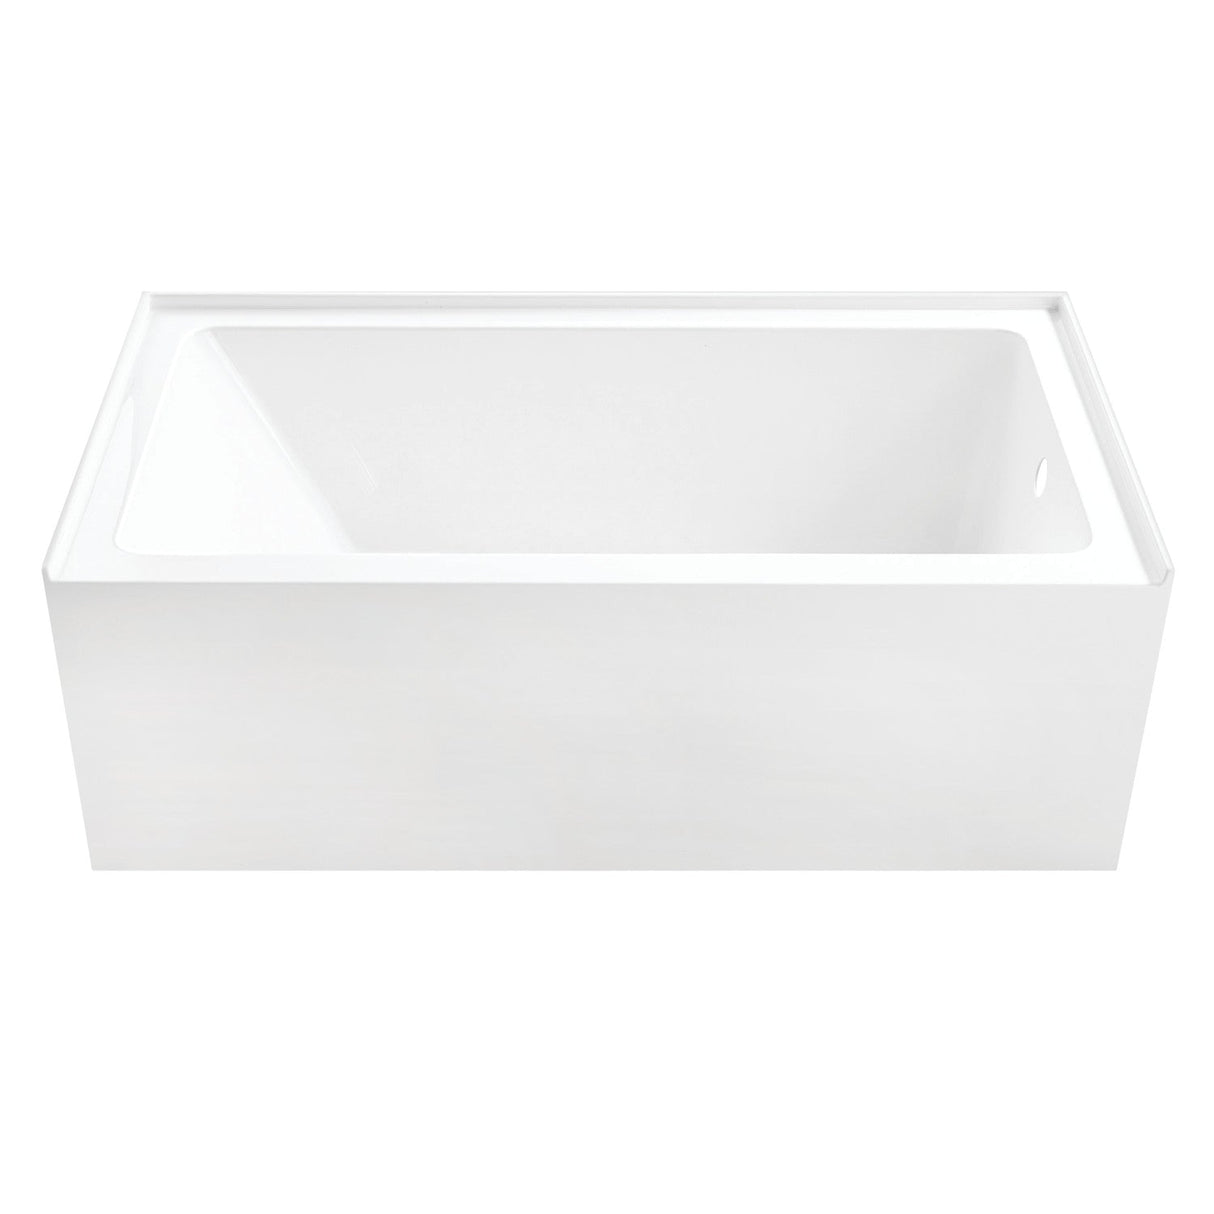 Aqua Eden VTAP6031R22T 60-Inch Anti-Skid Acrylic 3-Wall Alcove Tub with Right Hand Drain Hole, Glossy White